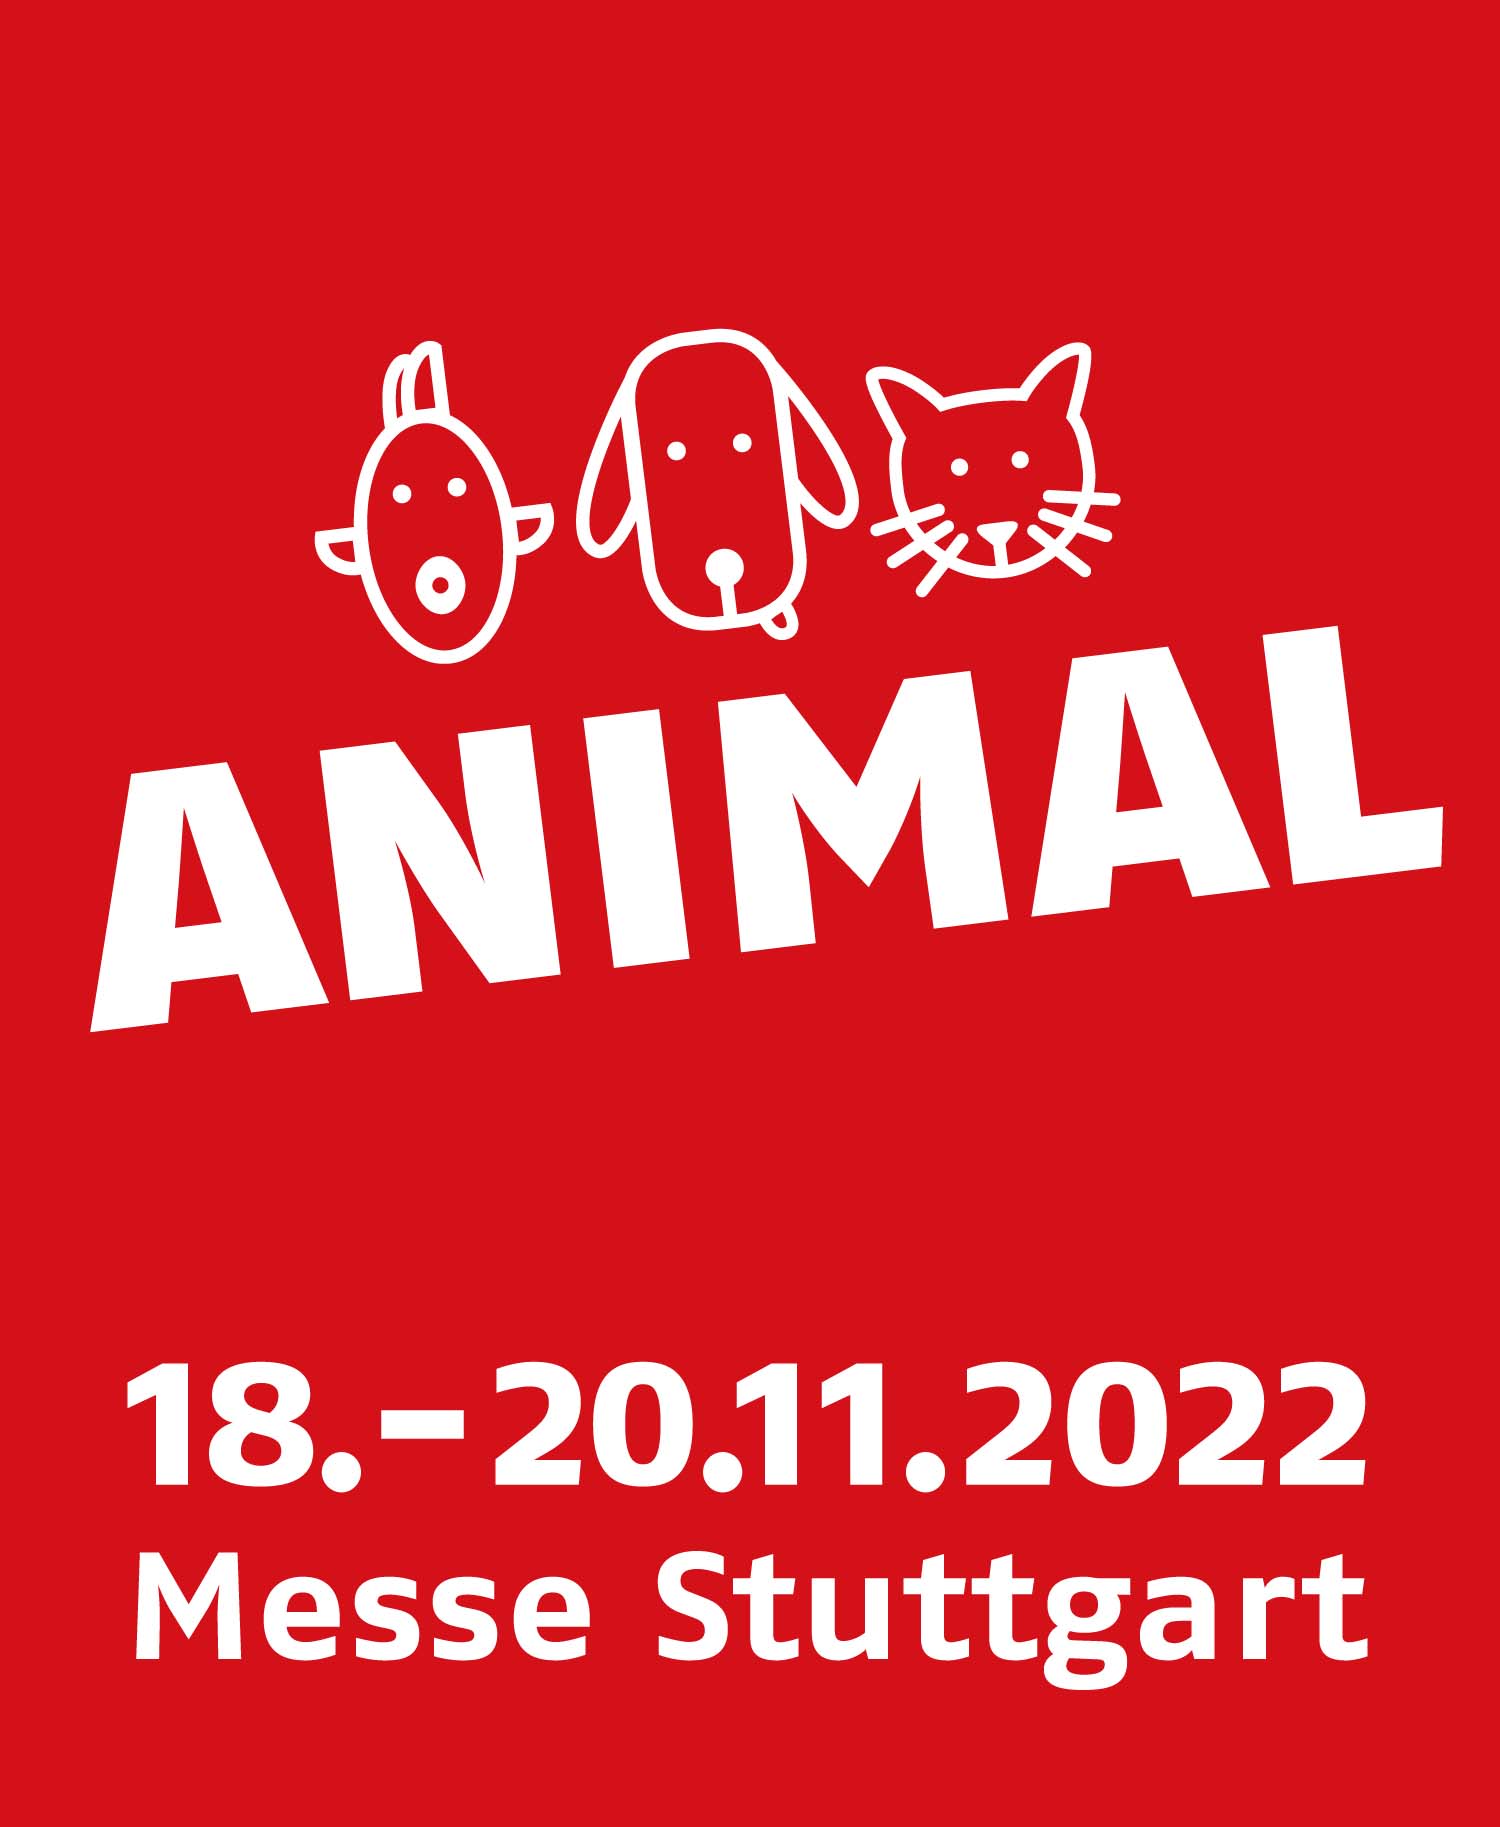 Animal | Stuttgart Image